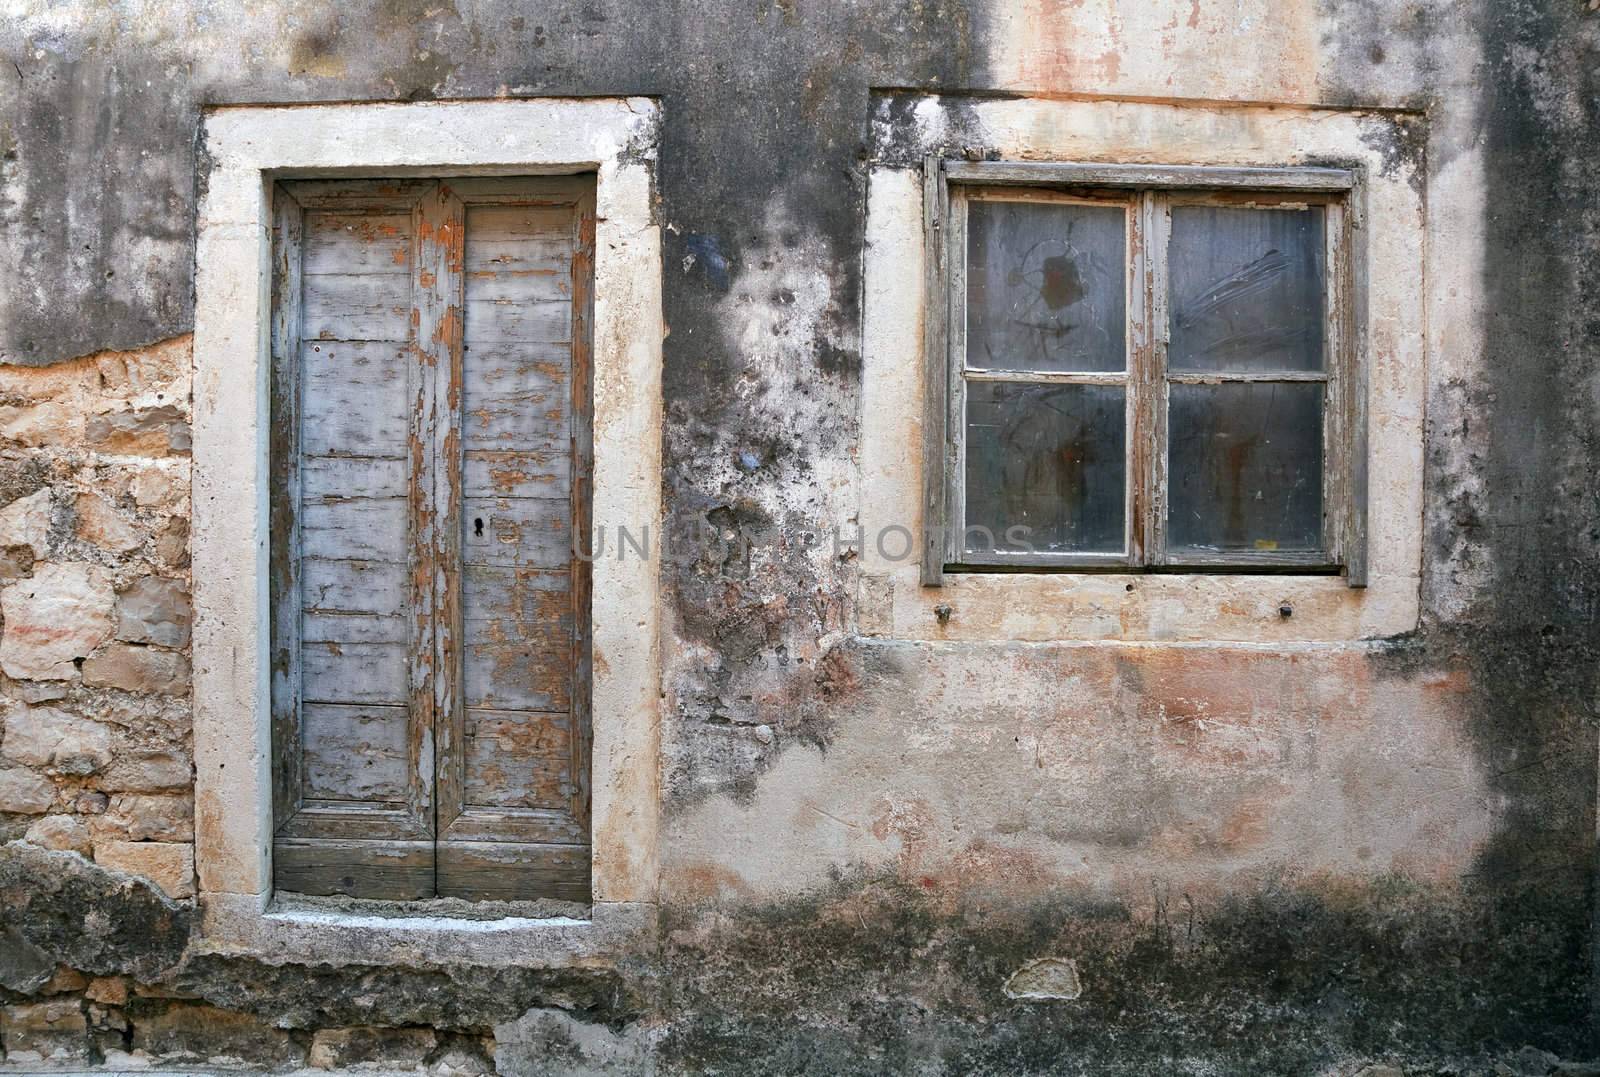 Window and entrance of abandoned house Croatia.